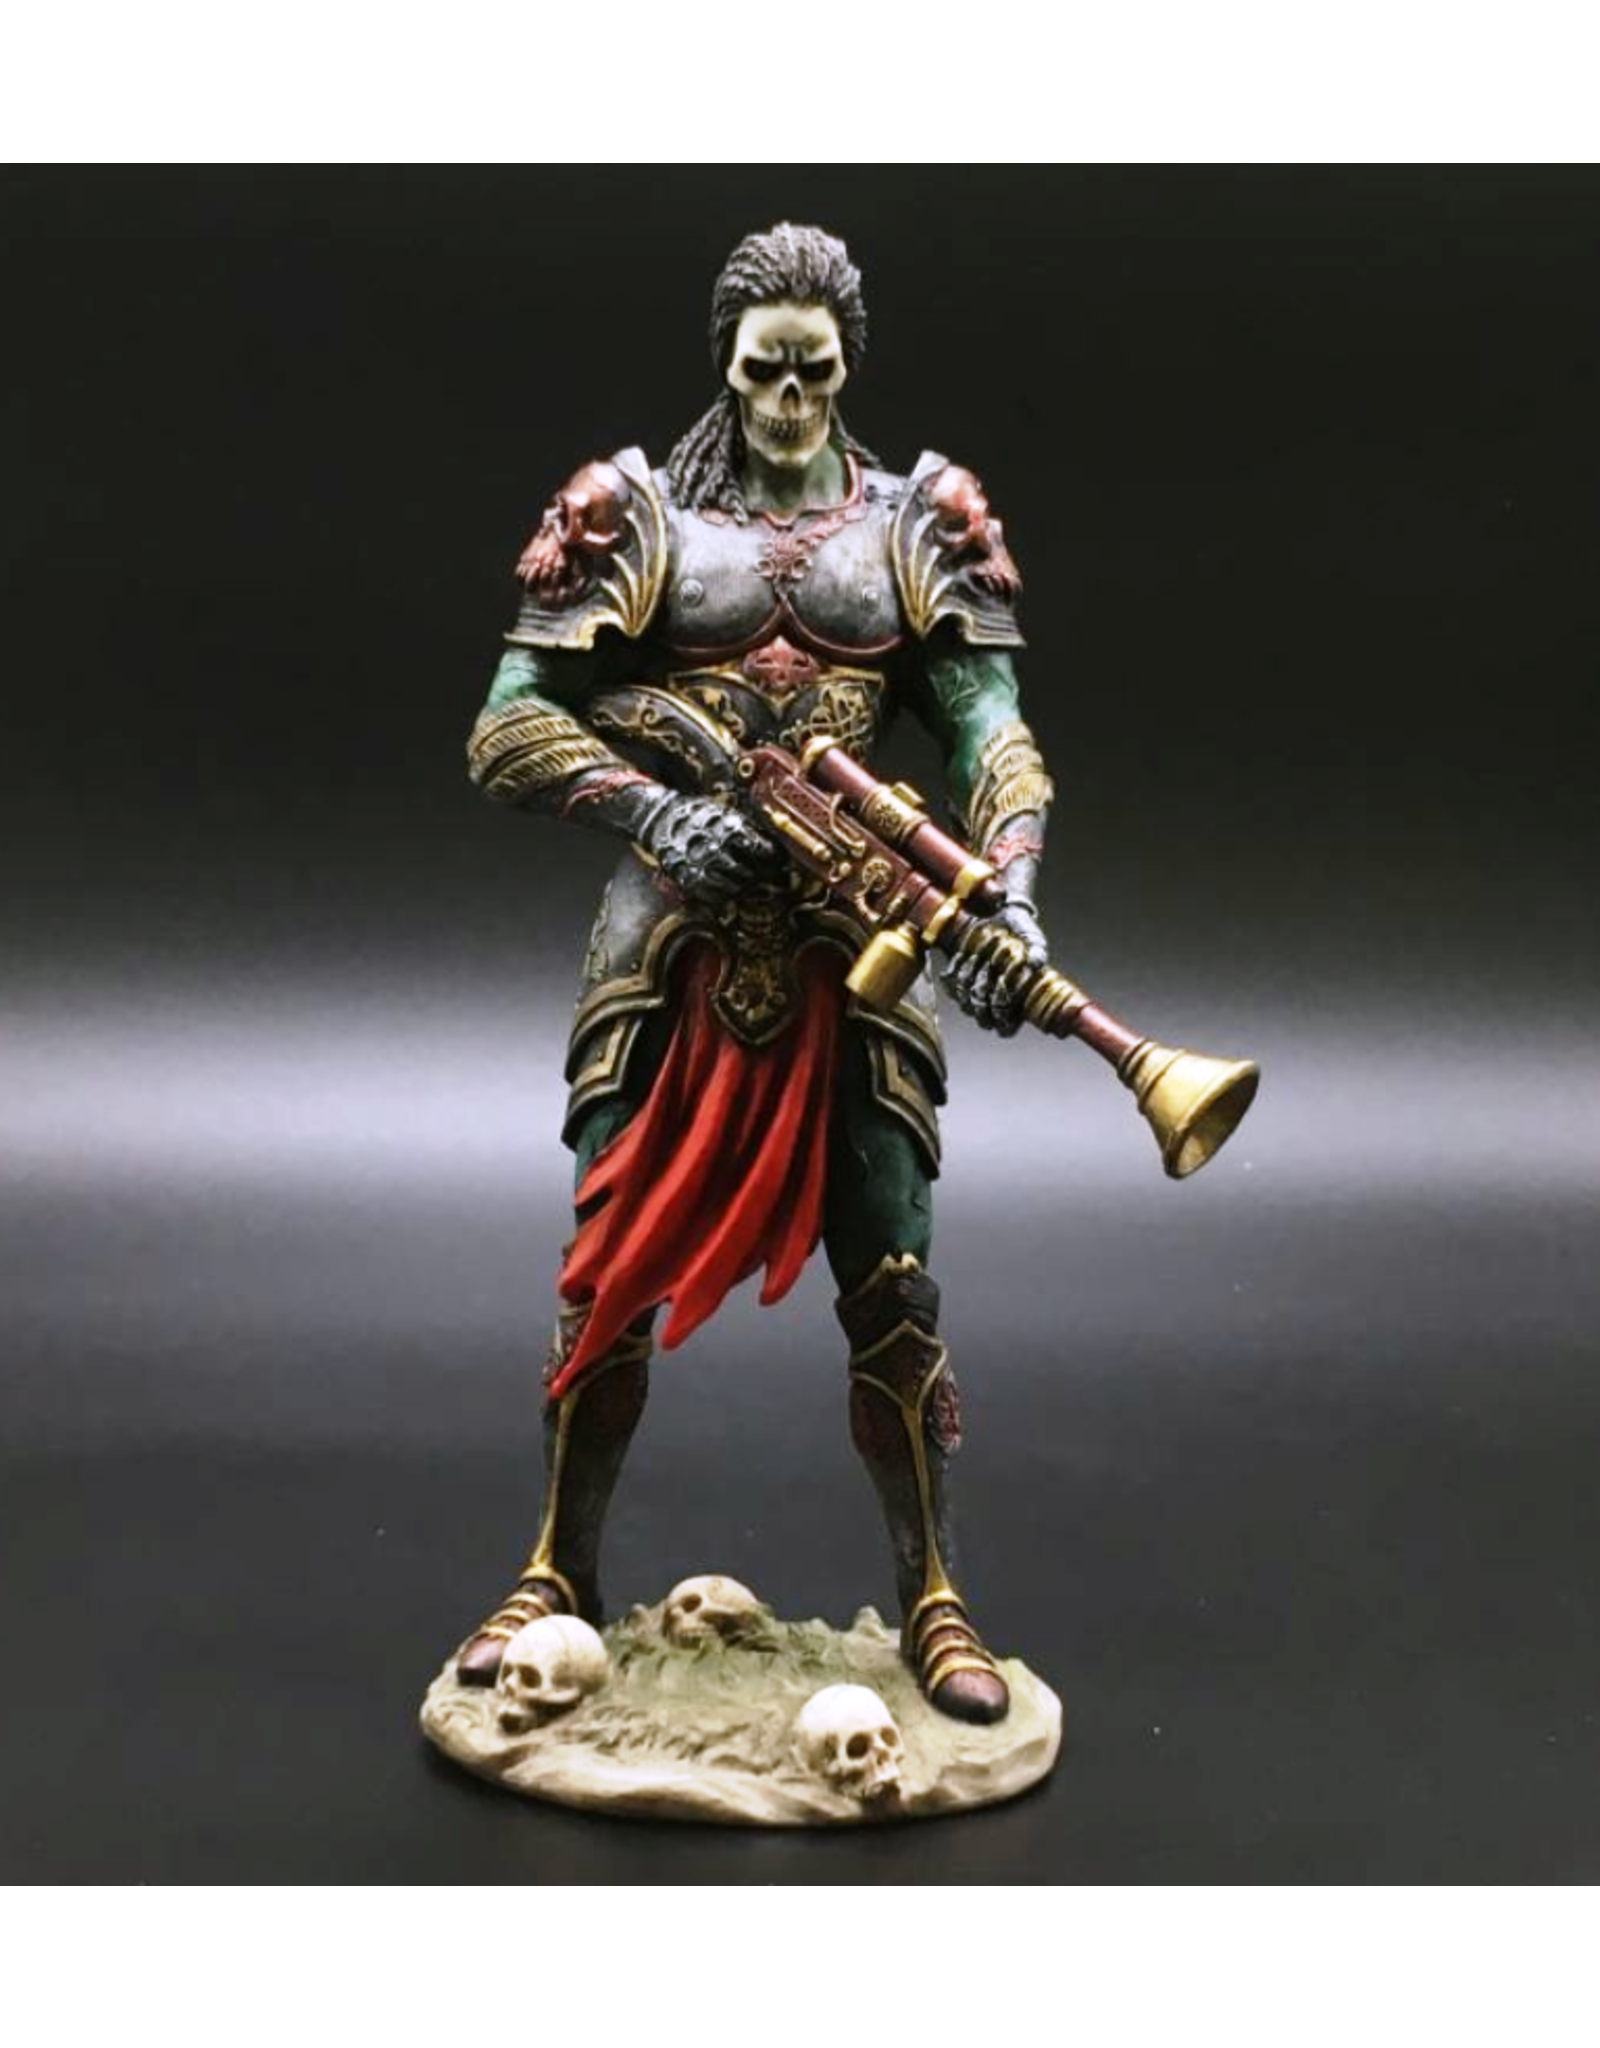 Veronese Design Giftware & Lifestyle - Armoured Zombie Warrior figurine 22.5cm